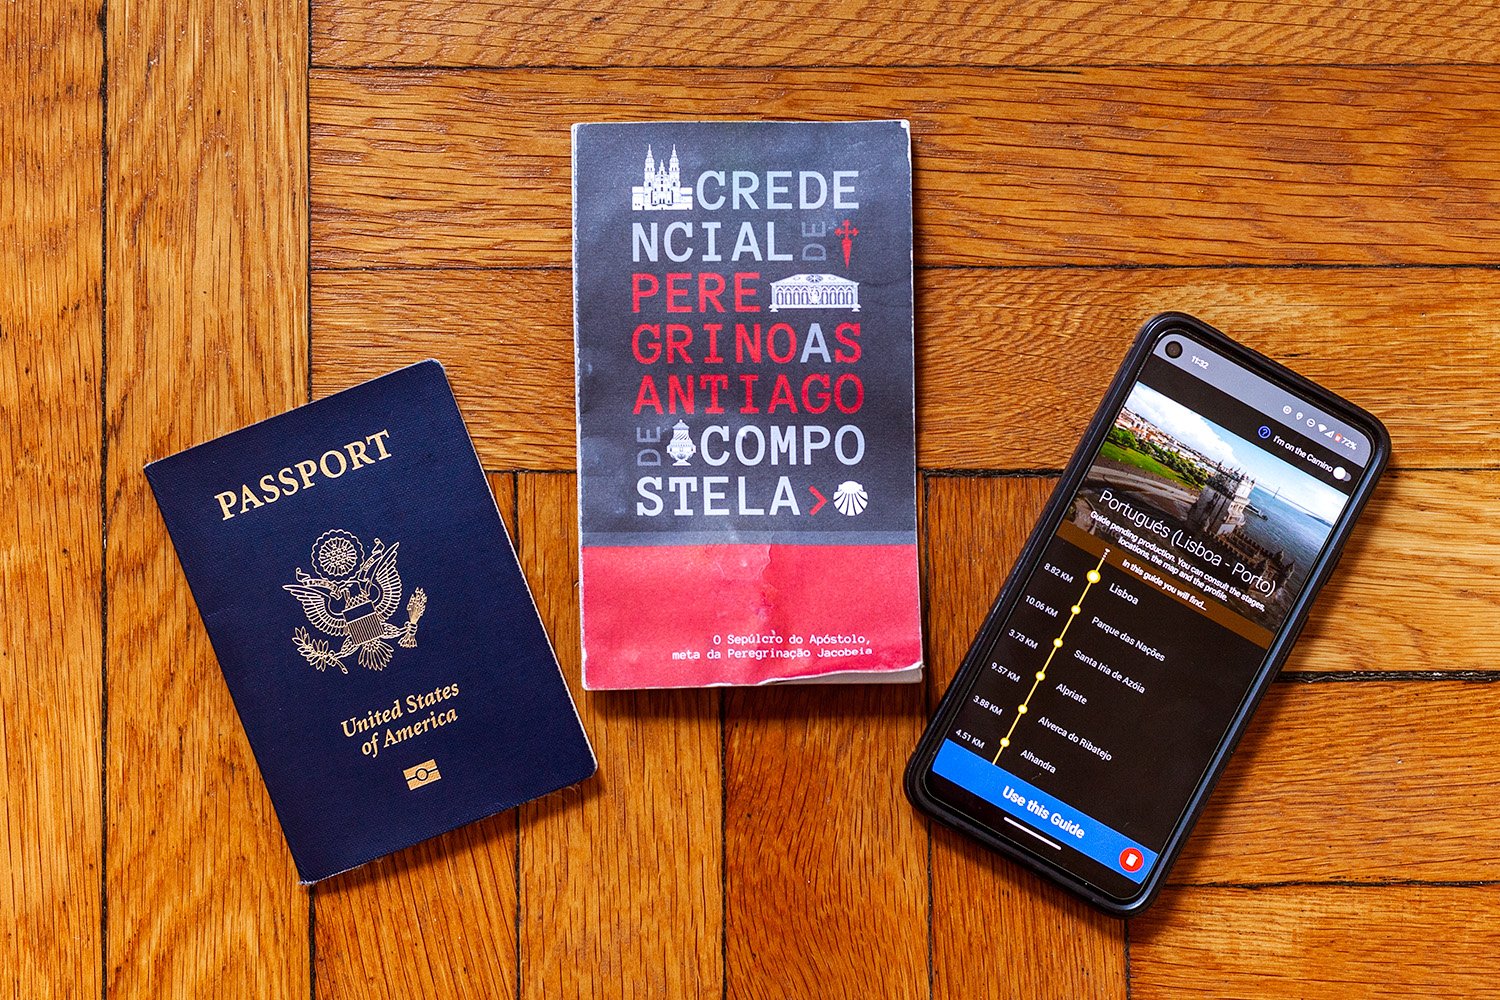 Passport, Camino de Santiago pilgrim credential, and Buen Camino app flatlay on a wood floor